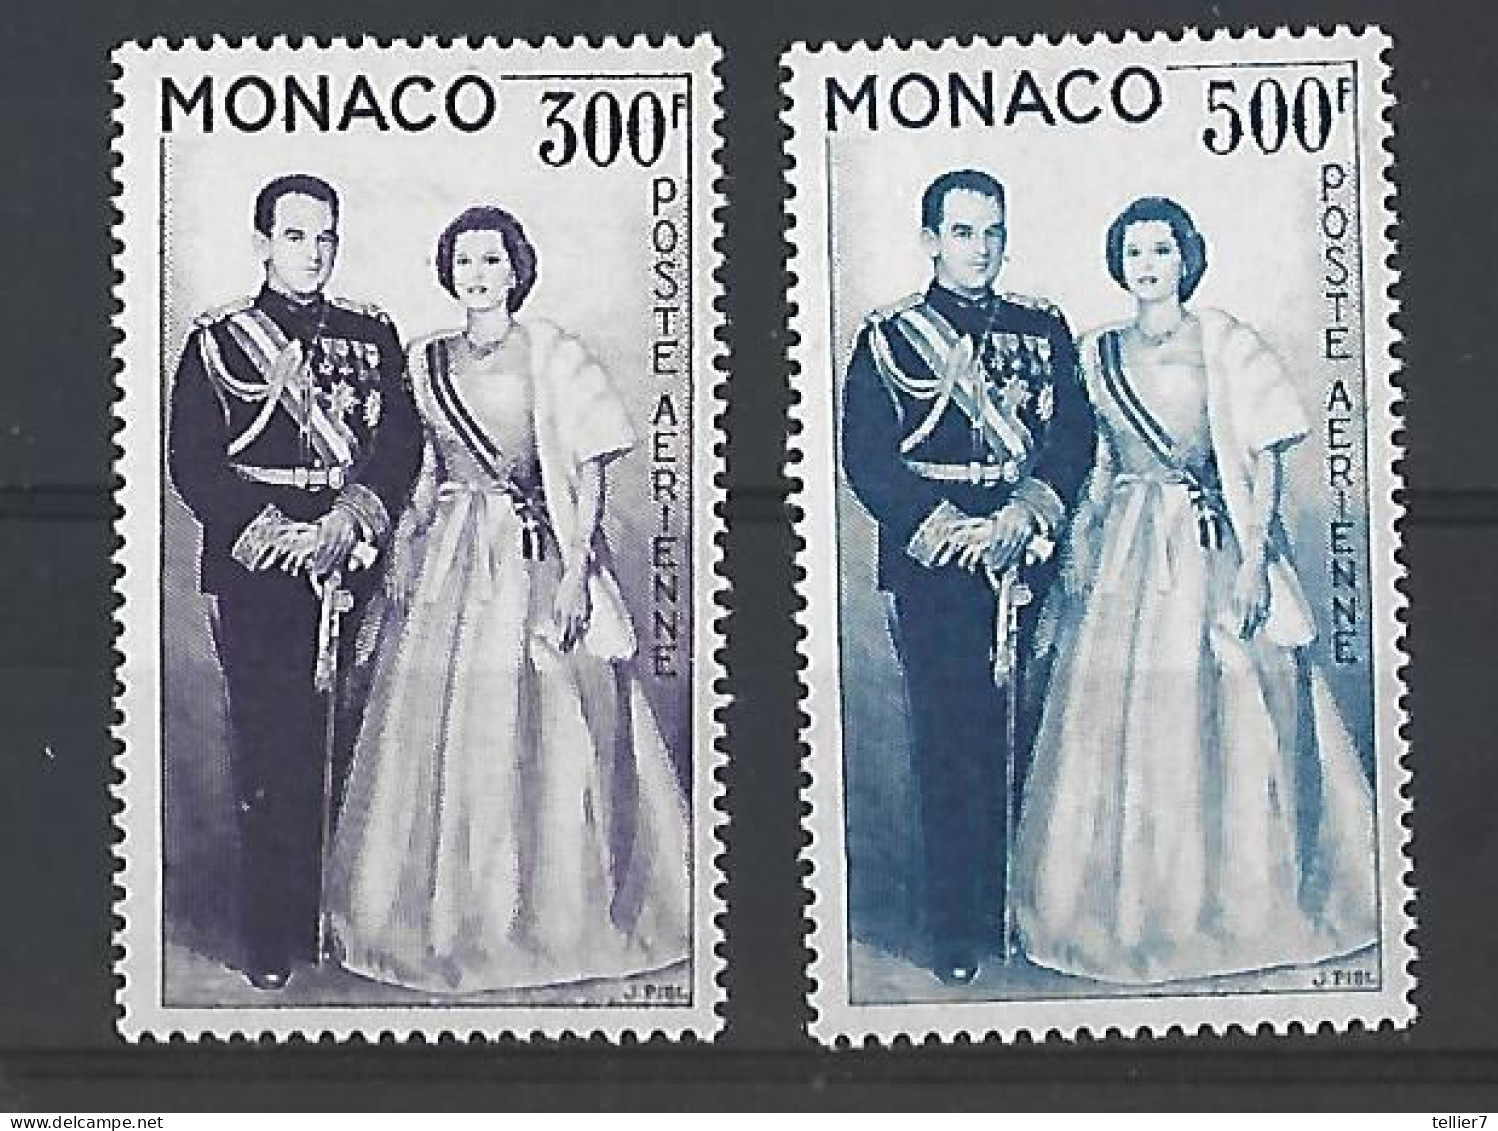 MONACO - TIMBRES NEUFS** - PA - N° 71/72 - 1958 - COUPLE PRINCIER - VOIR SCAN - Unused Stamps